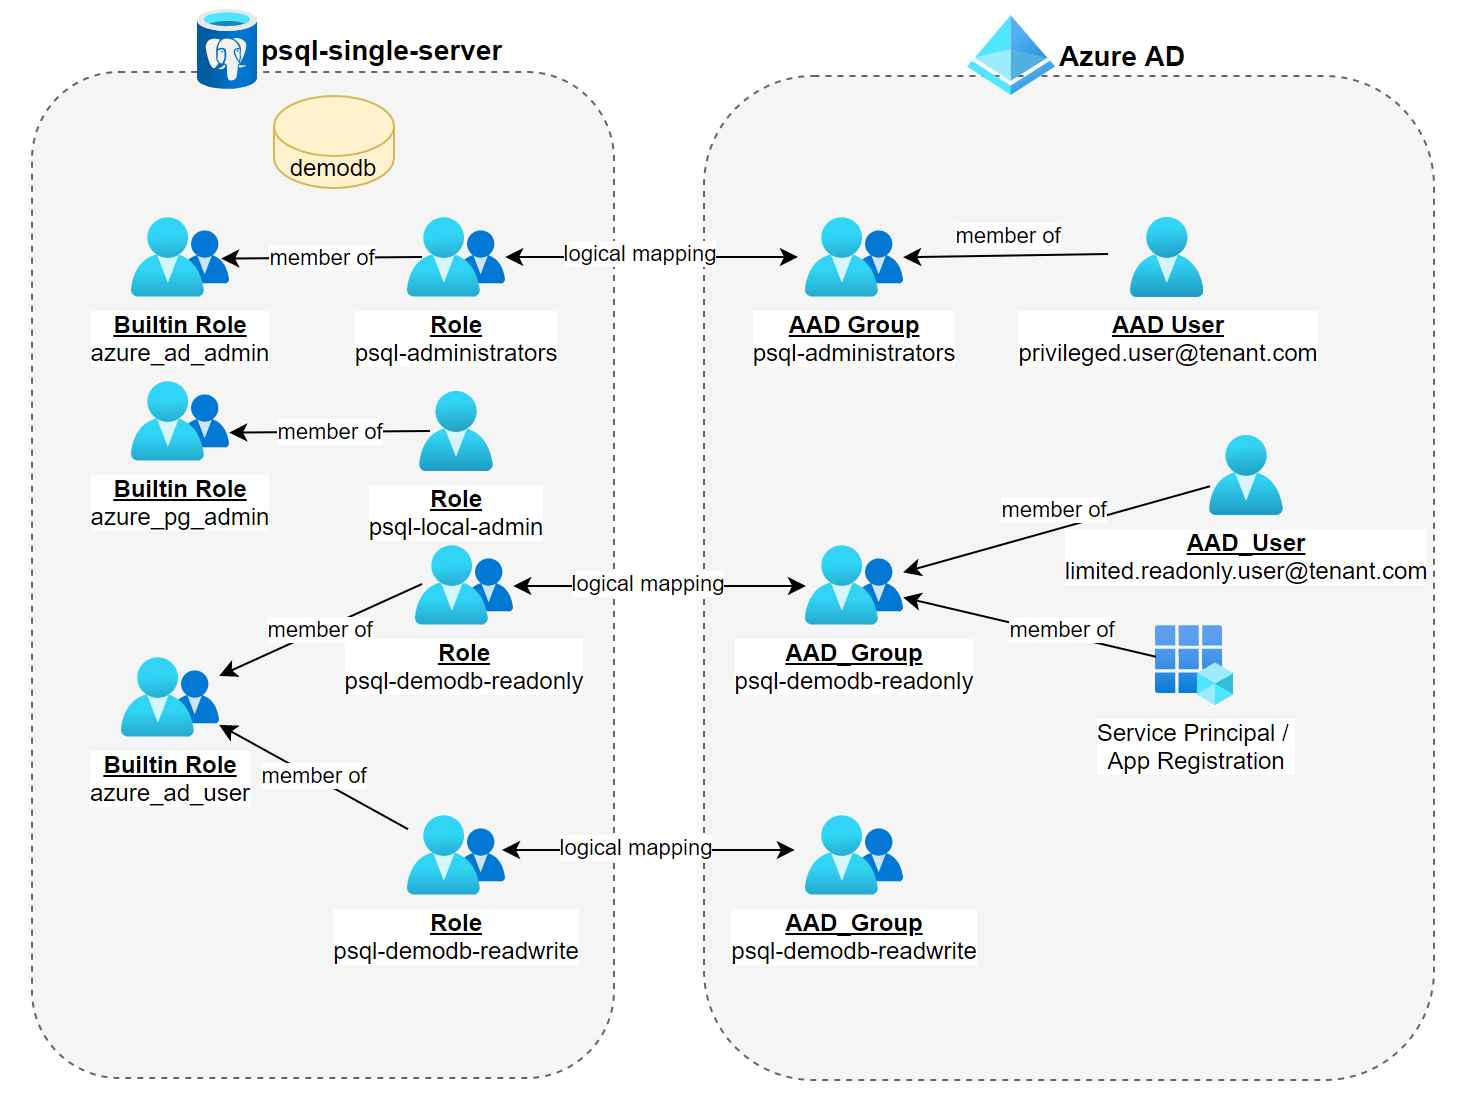 How to manage PostgreSQL database permissions using Azure AD groups